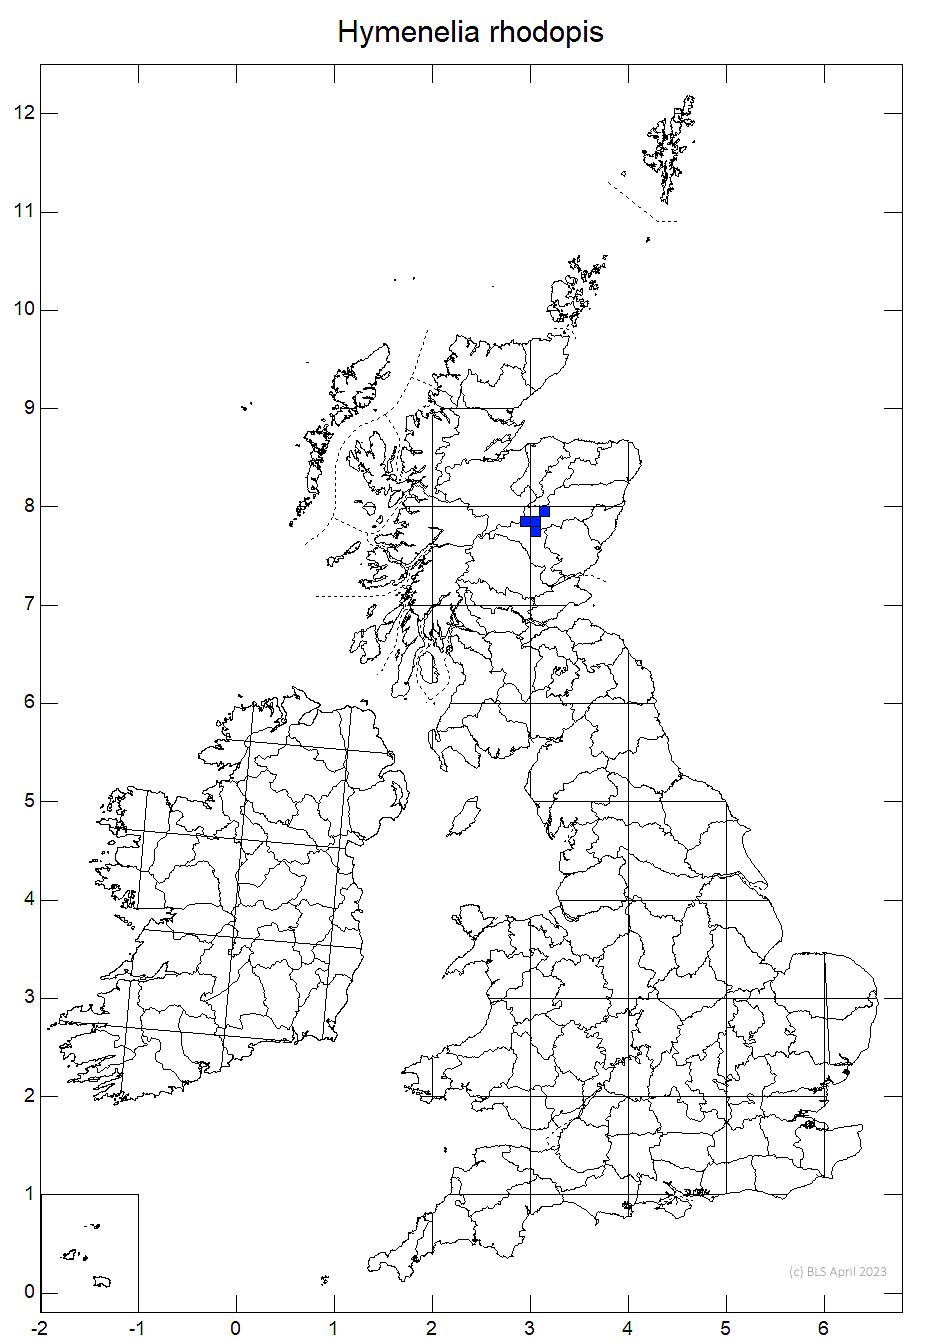 Hymenelia rhodopis 10km sq distribution map